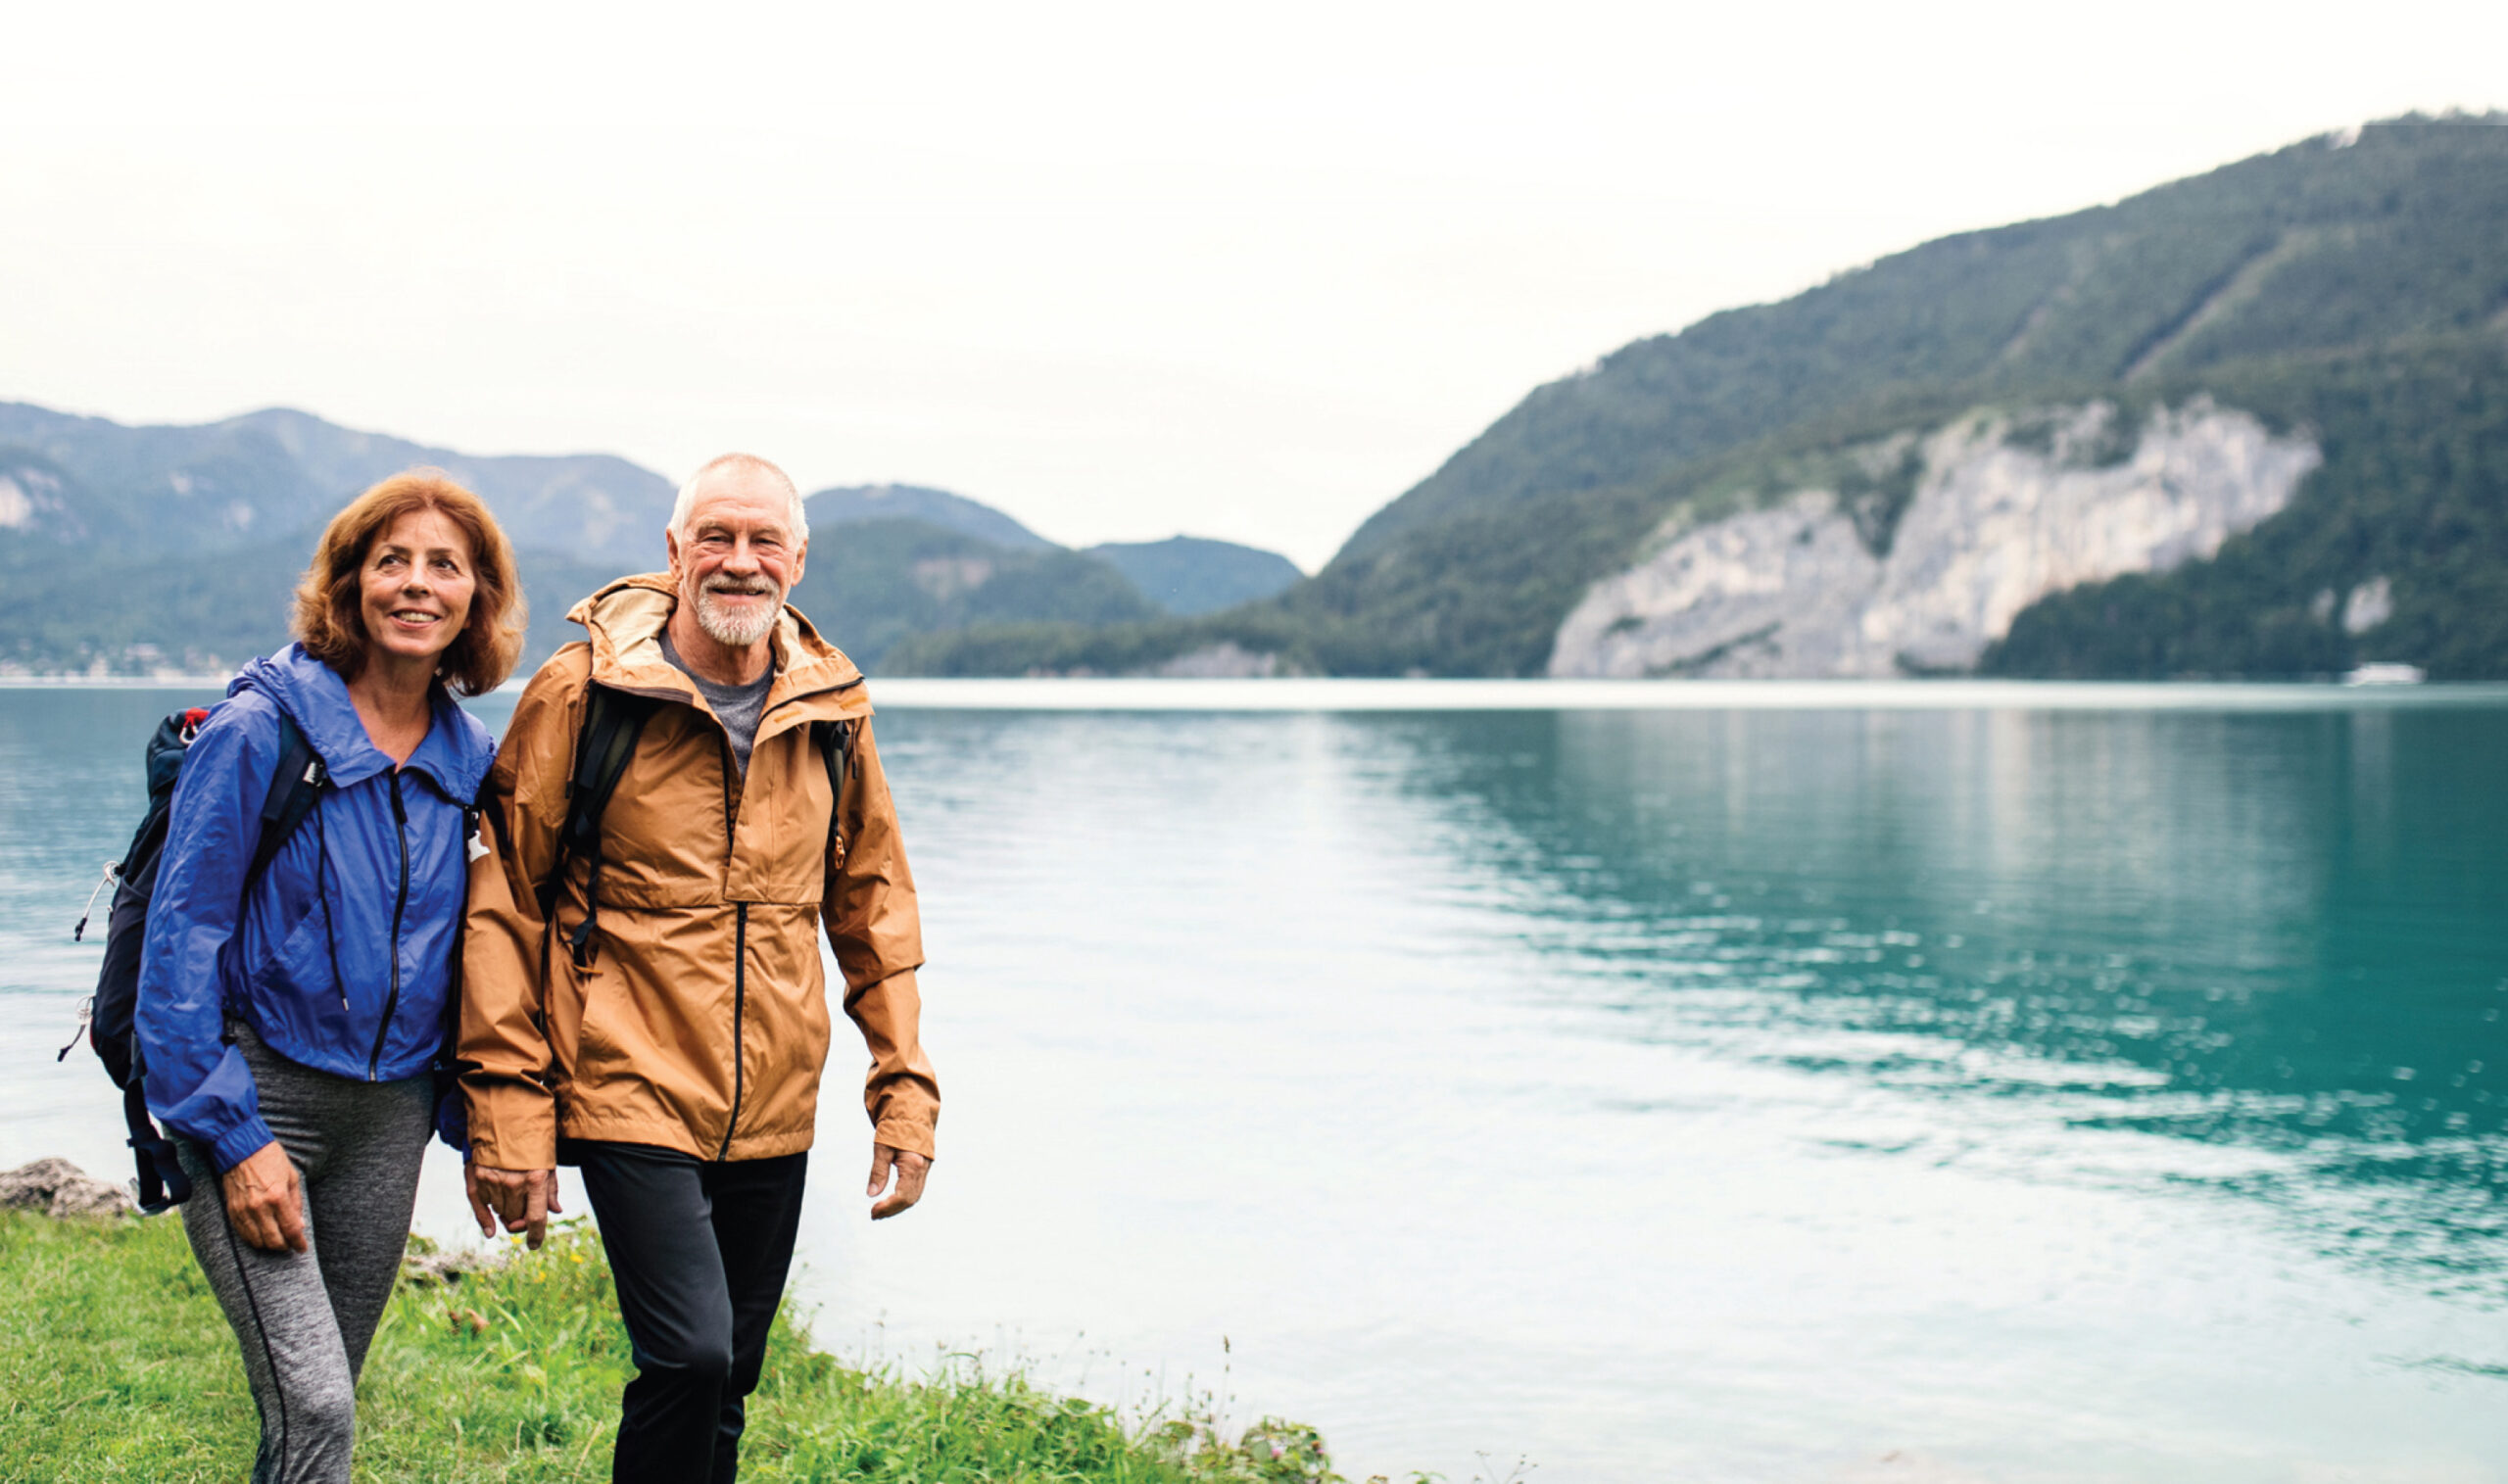 Older man and woman hiking near a lake